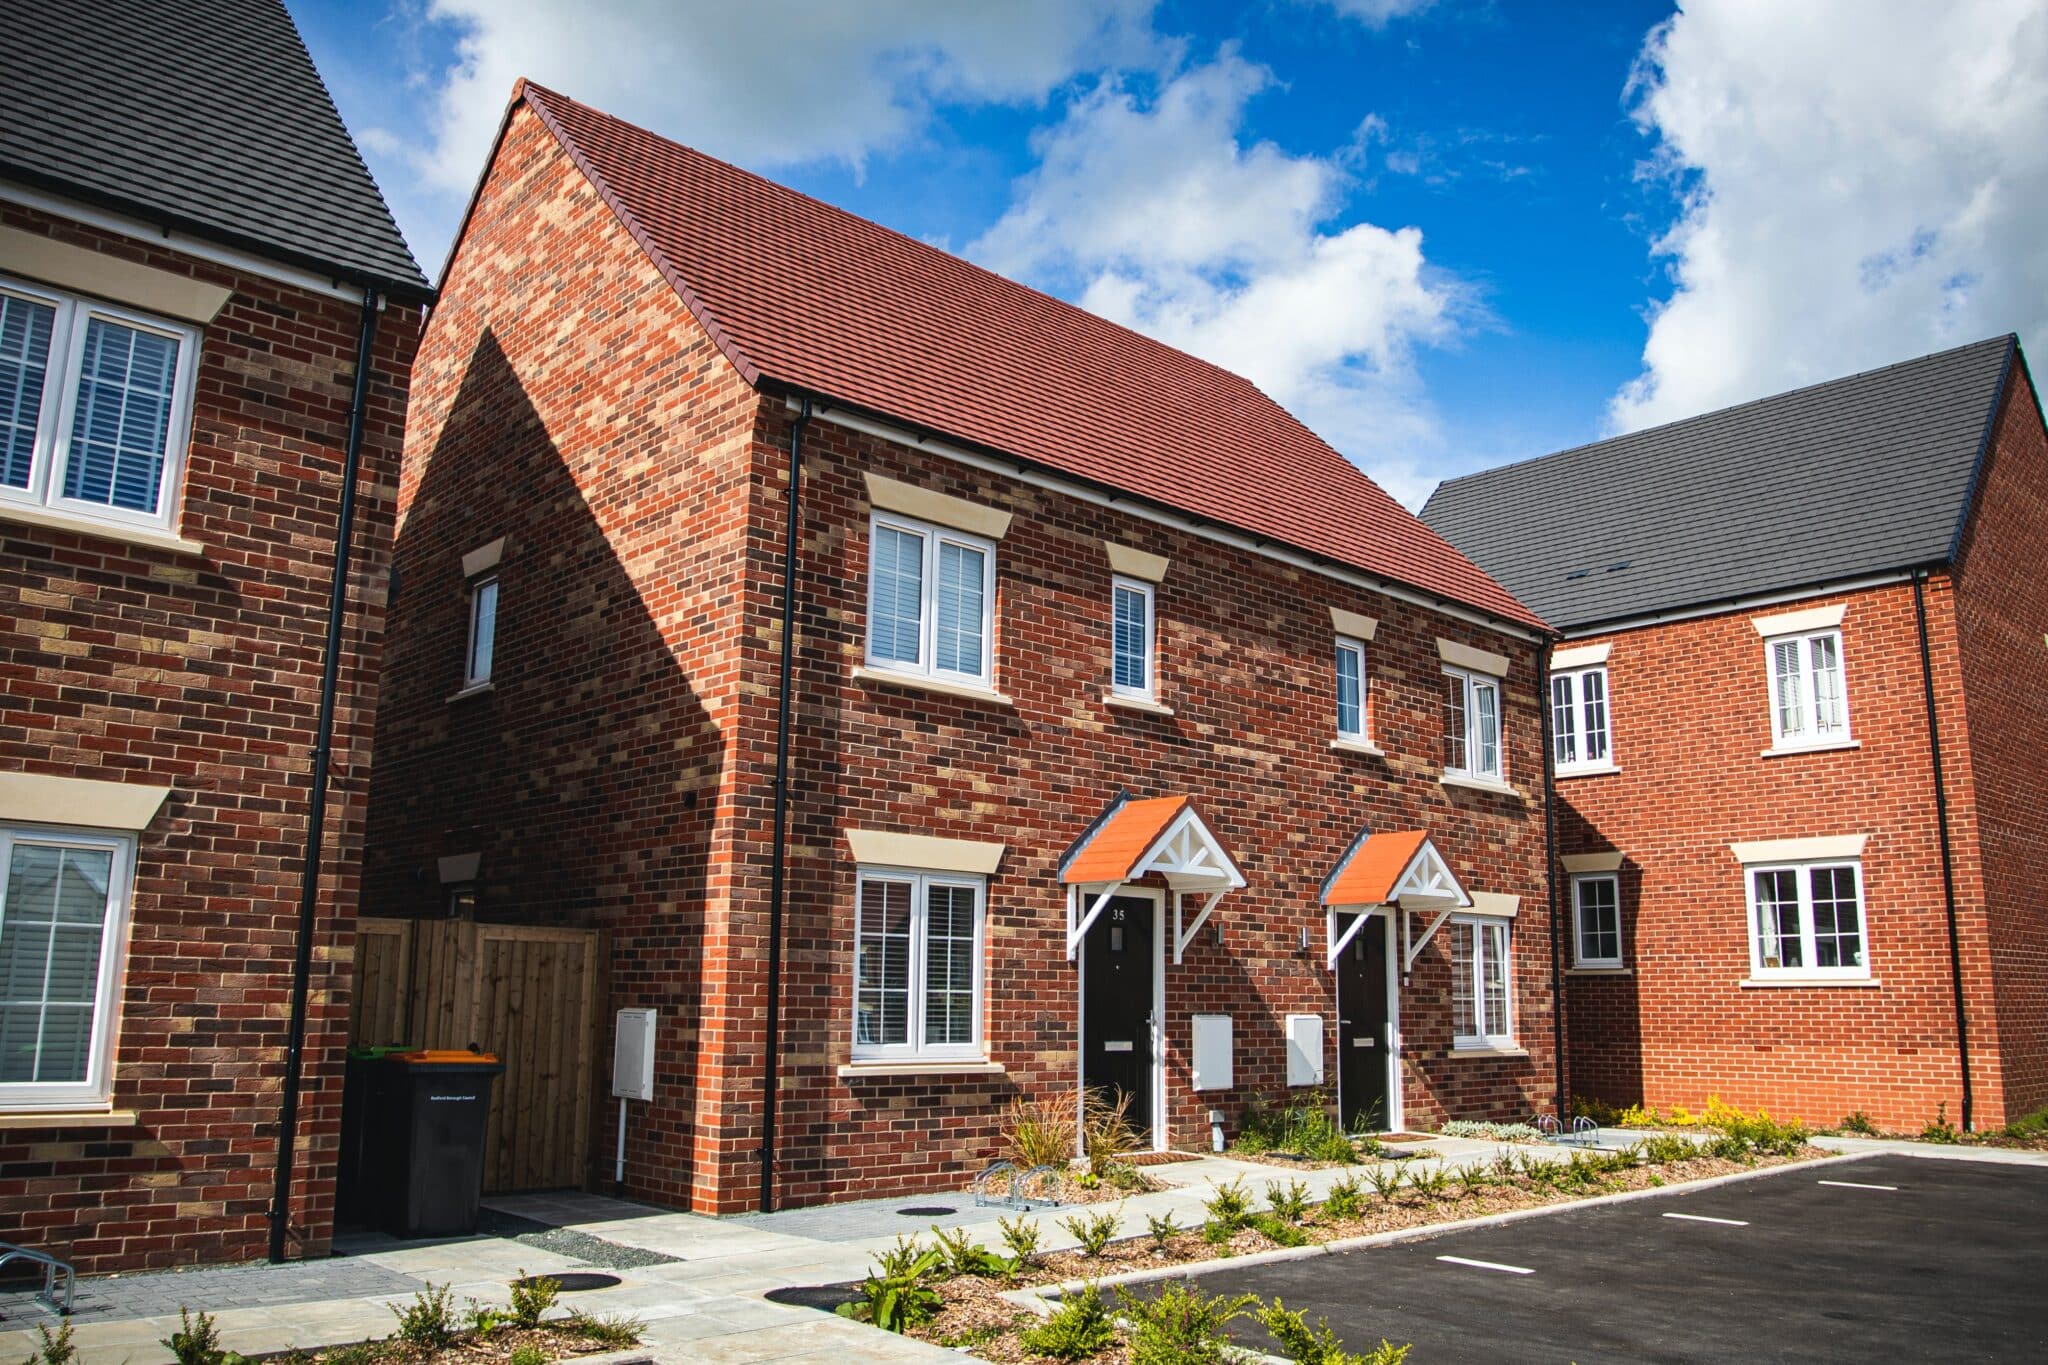 modern semi-detatched properties on a new housing development in the uk